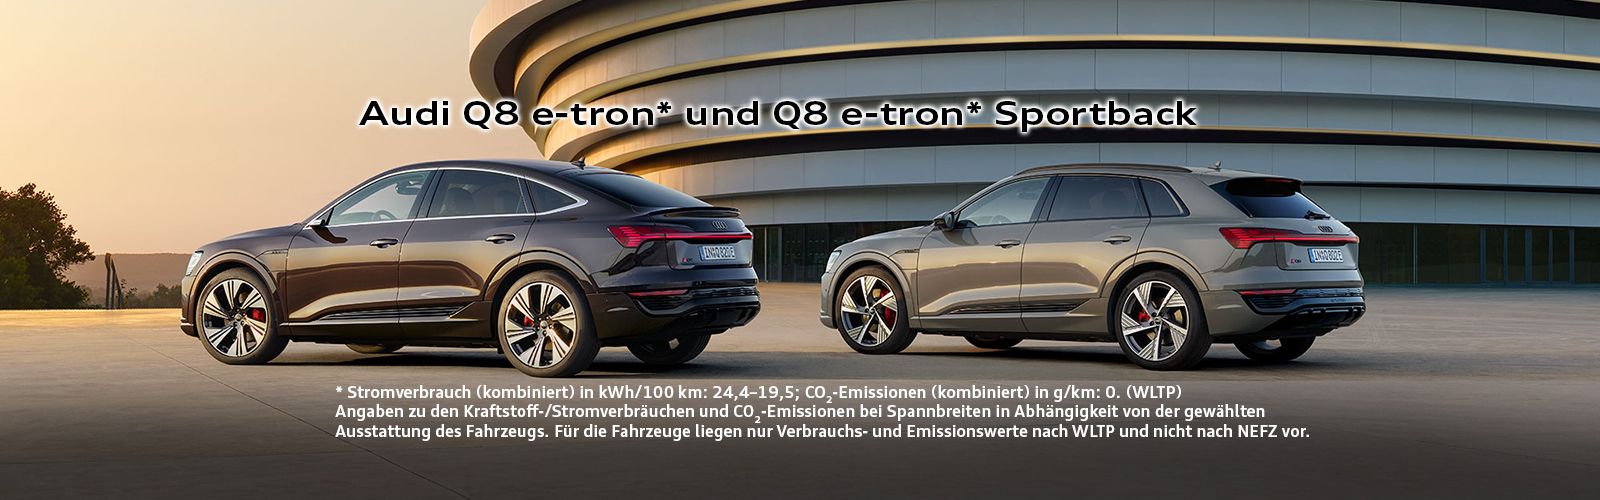 Audi Q8 e-tron und Q8 e-tron sportback - Jetzt bestellbar!